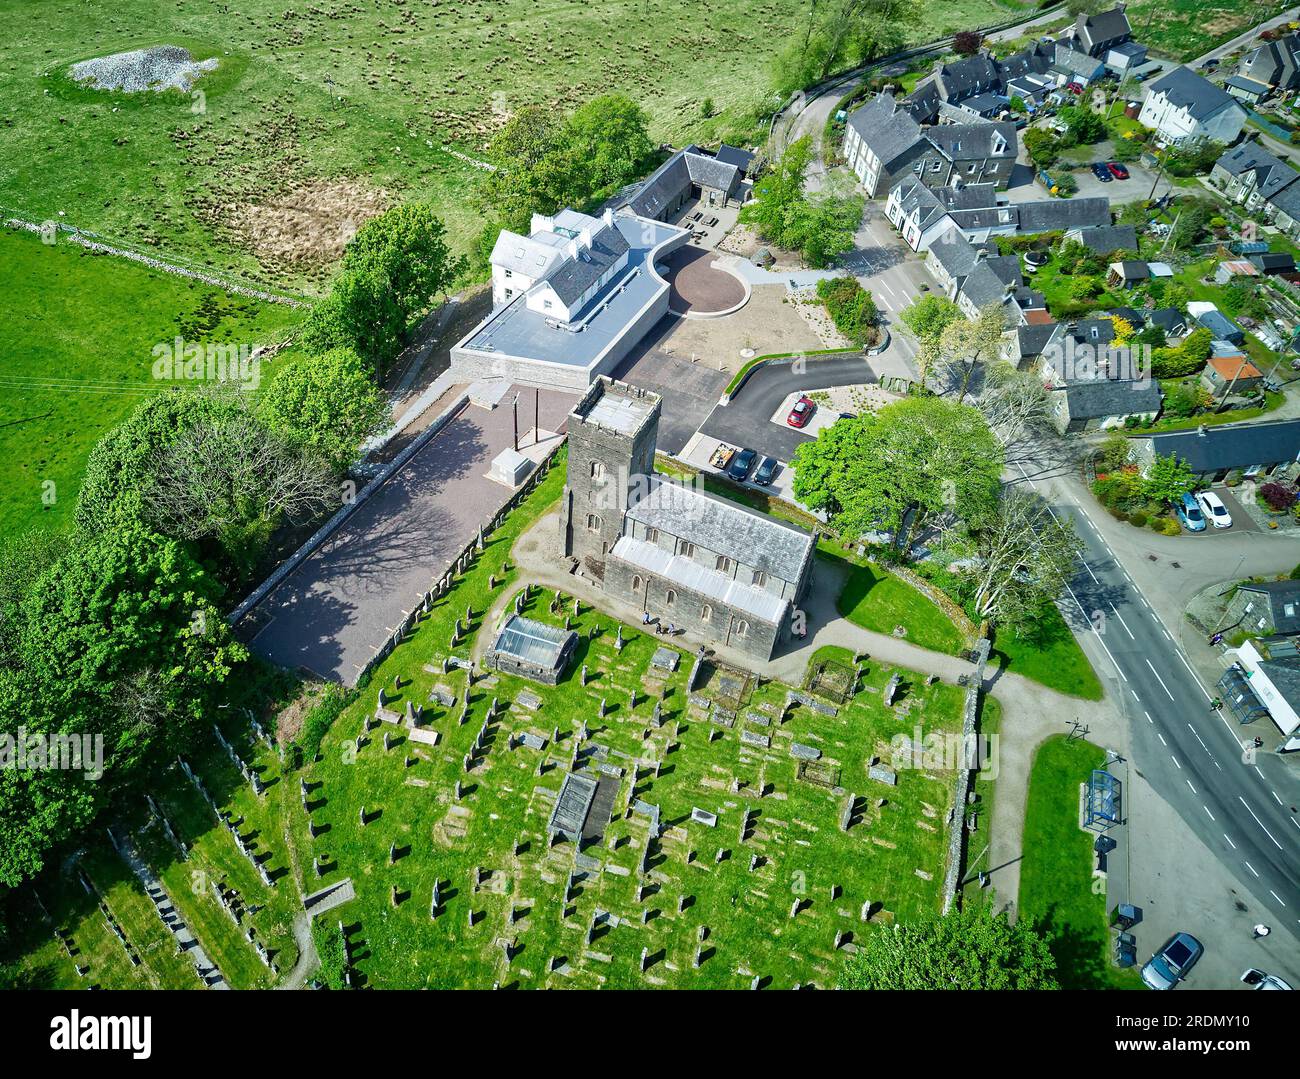 The Village of Kilmartin, Kilmartin Church, Glebe Cairn, part of Kilmartin Neolithic site, Argyll, Scotland Stock Photo